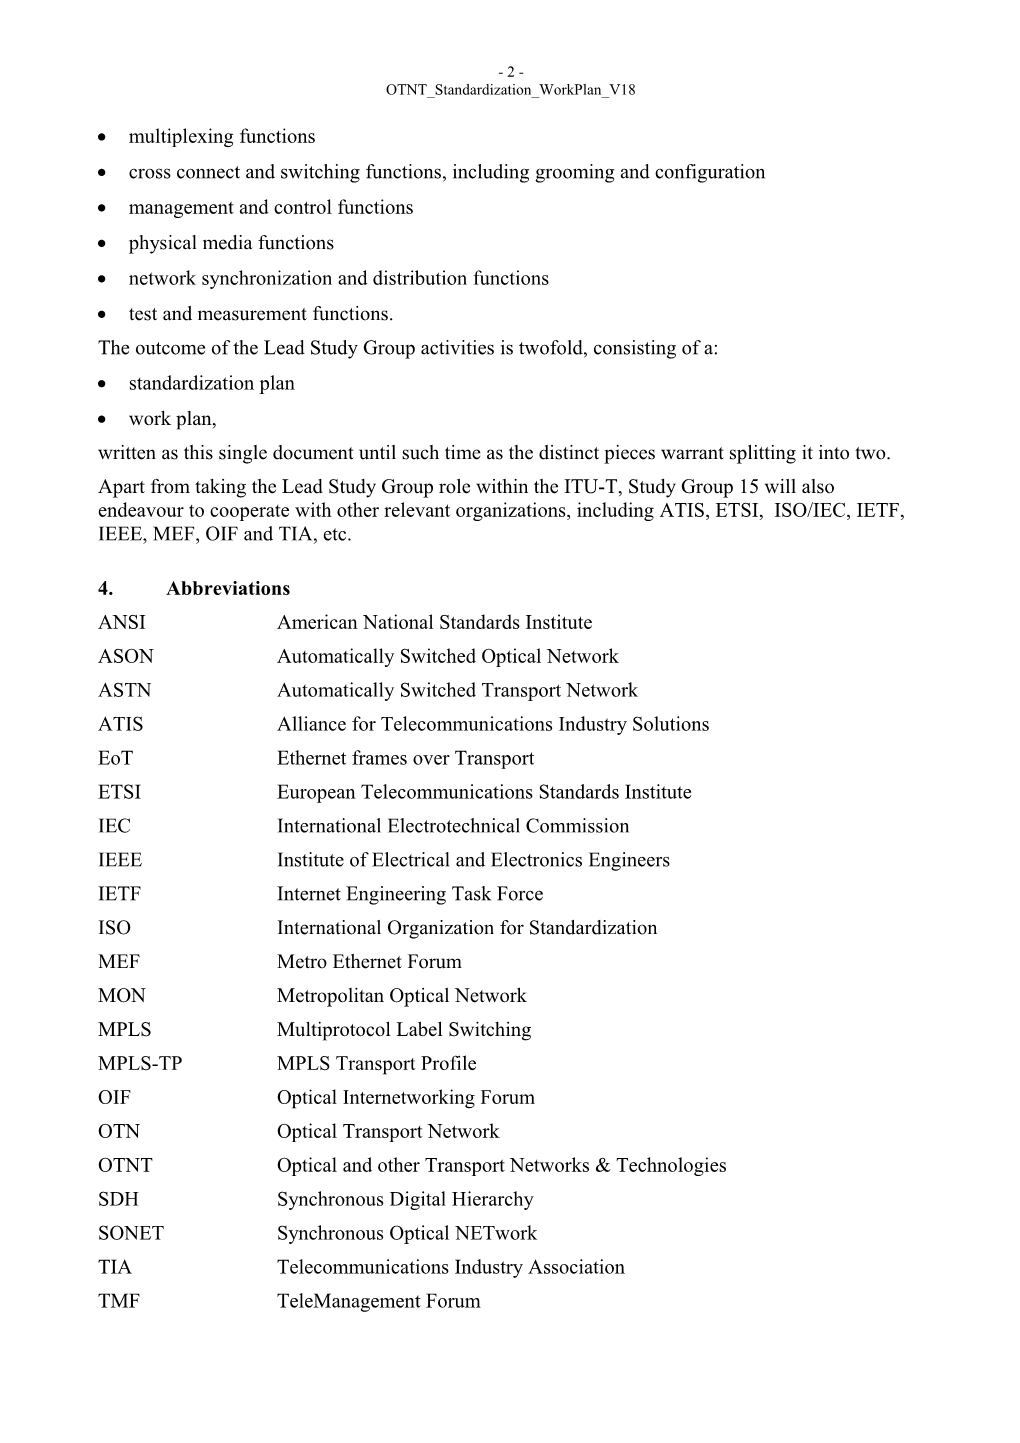 Draft Revised Optical Transport Networks & Technologies Standardization Work Plan, Issue 16